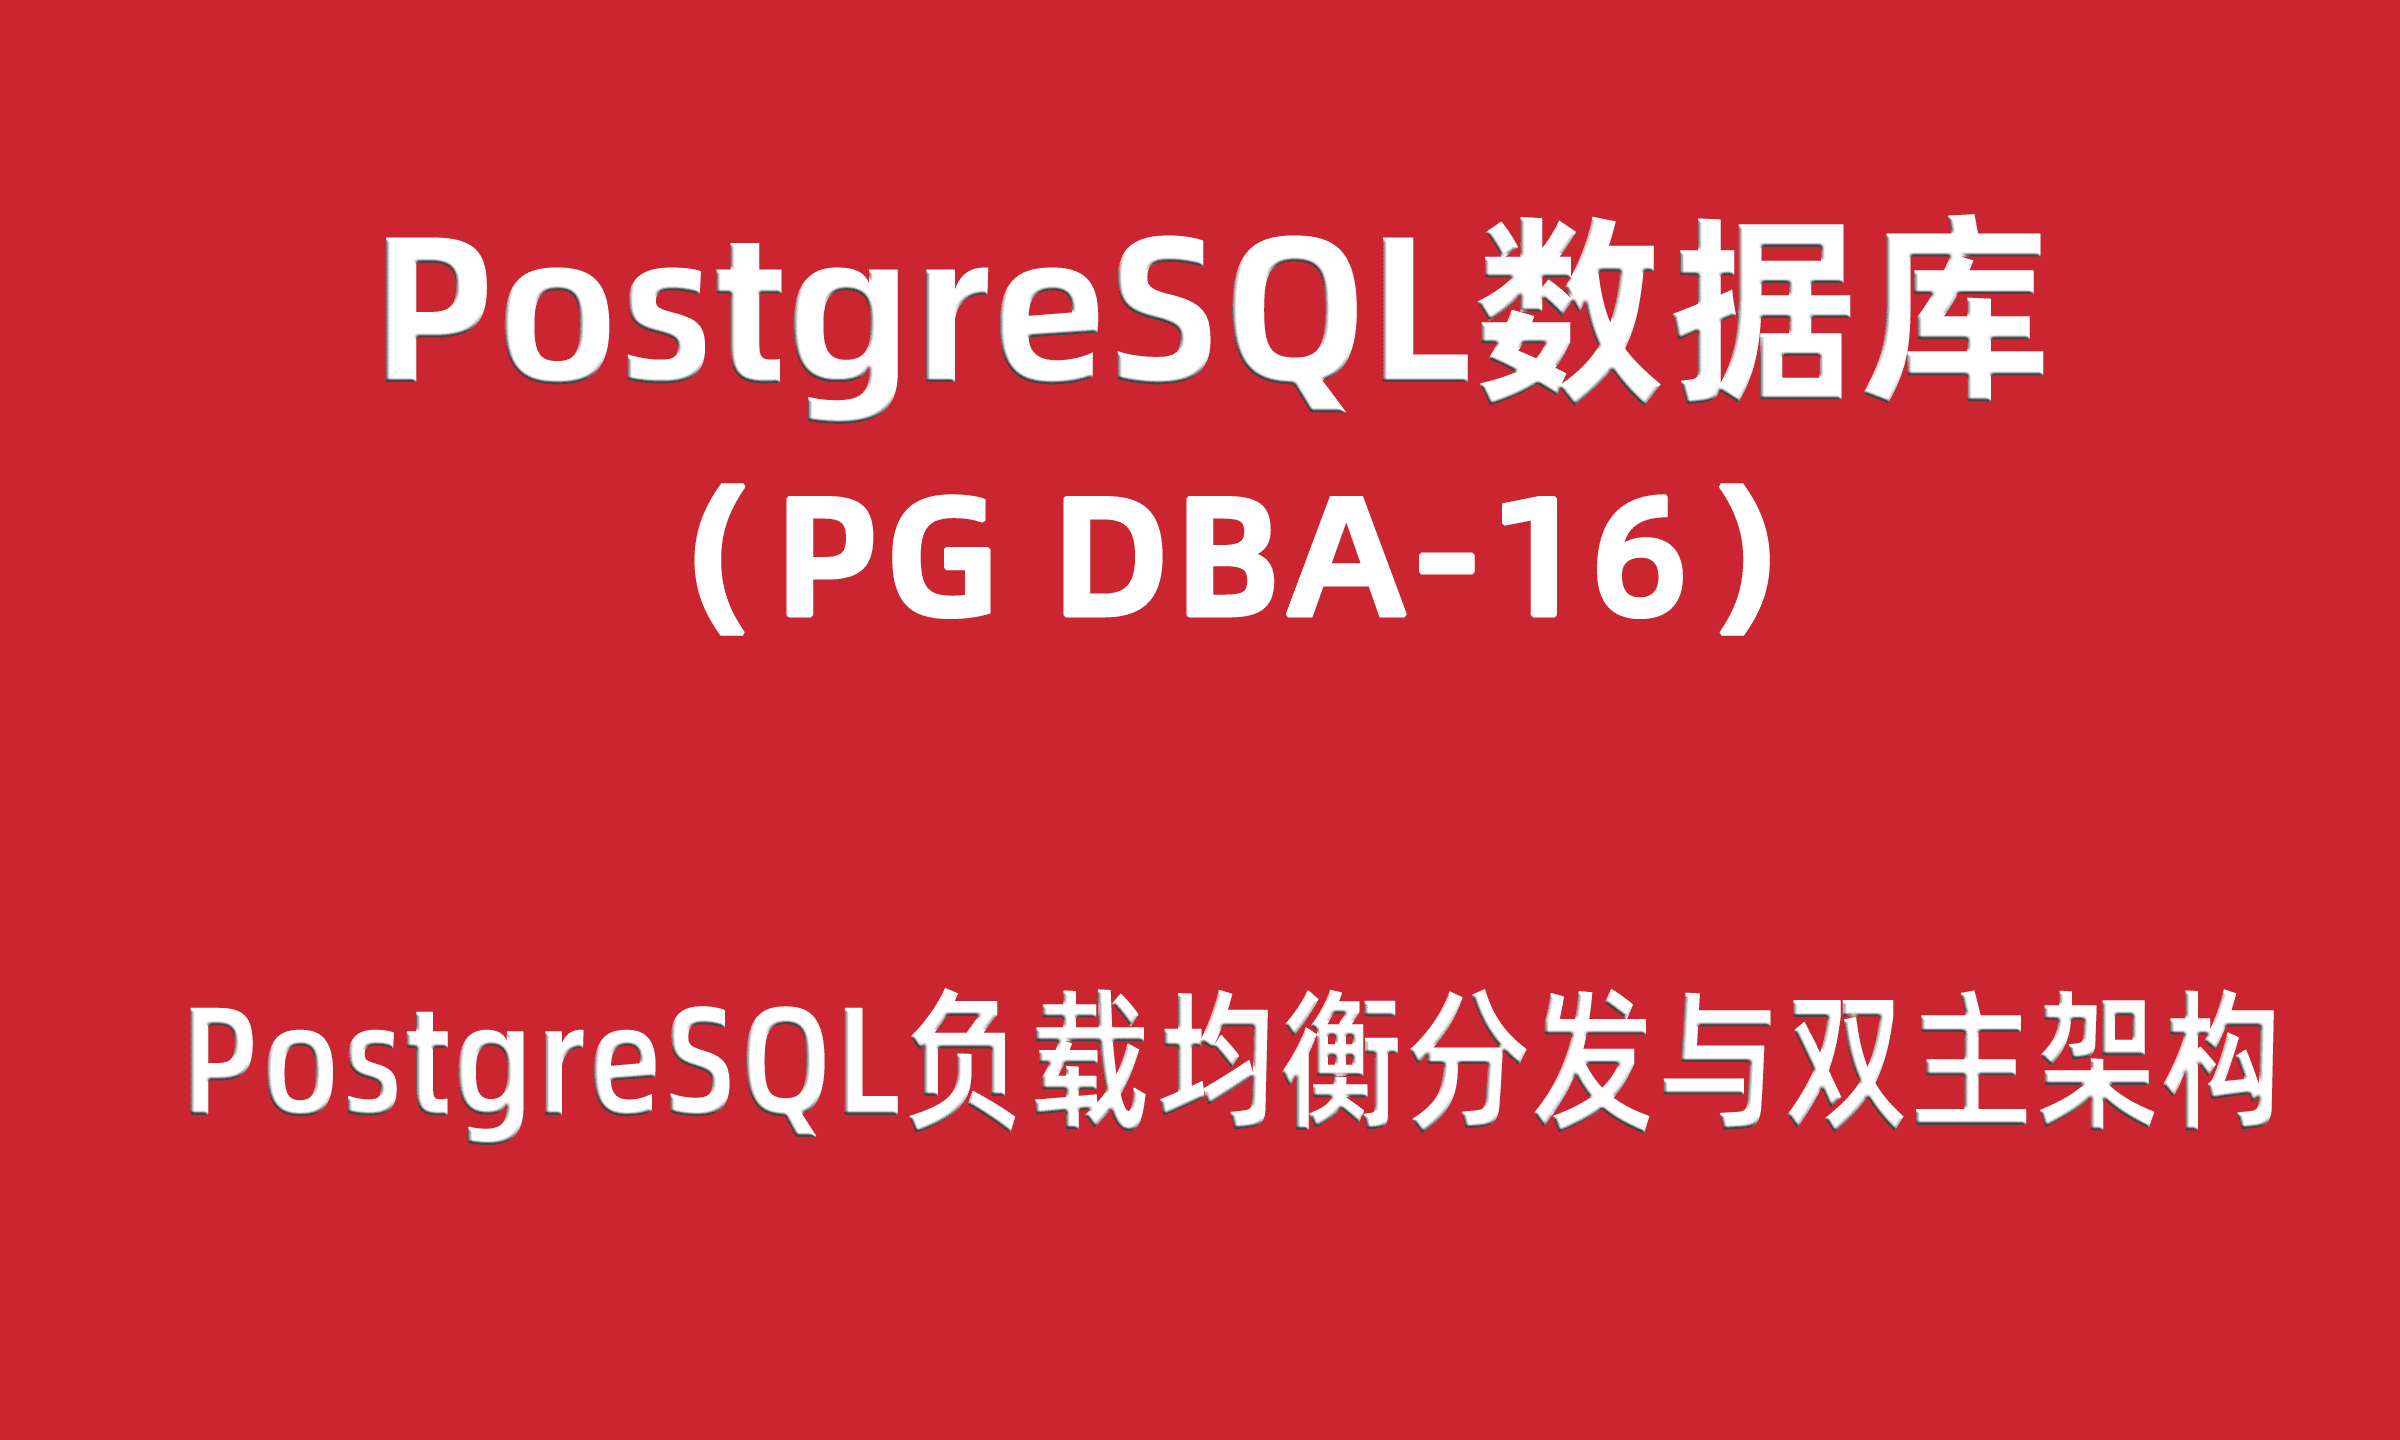  PG-DBA training 16: PostgreSQL load balancing distribution and dual master HA architecture